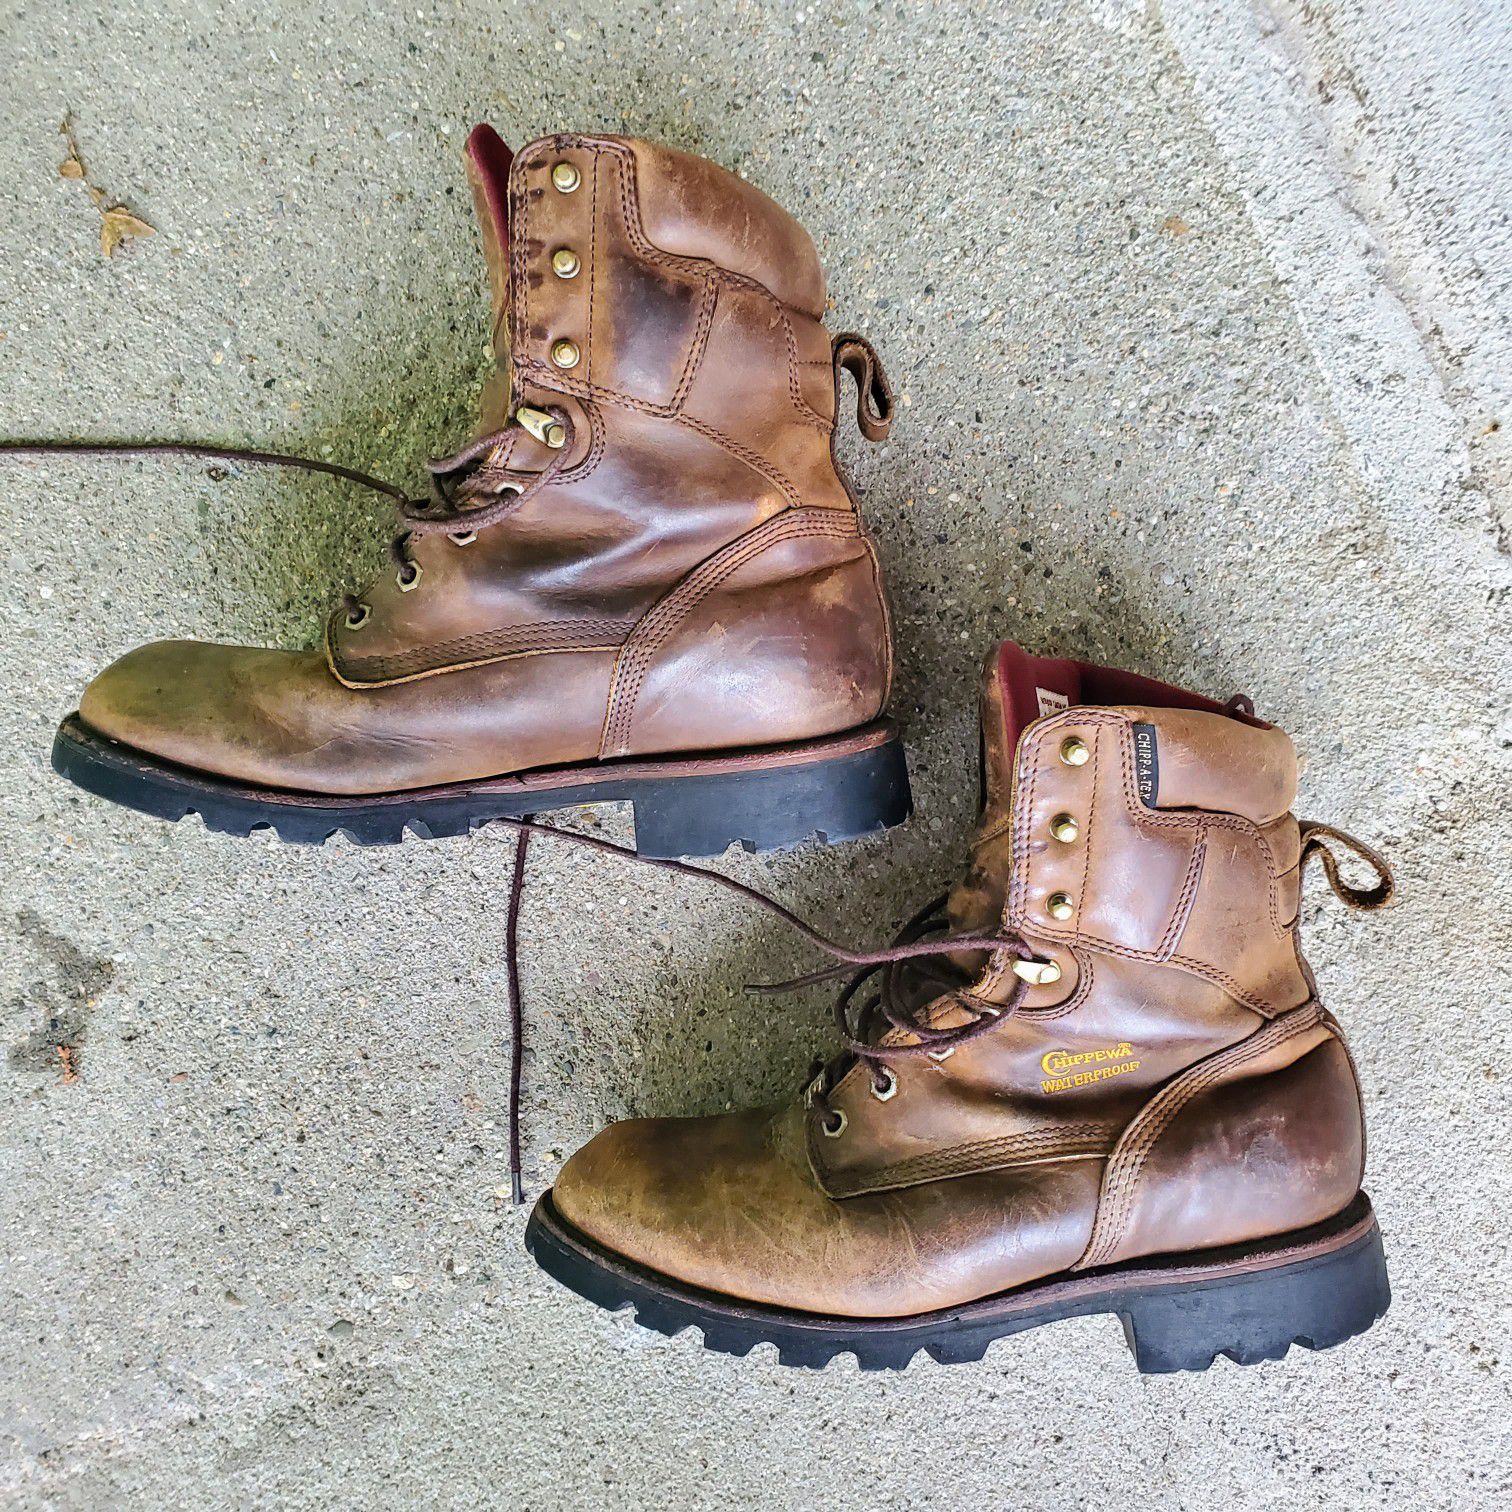 Chippewa waterproof insulated work boots. Men's size 9.5